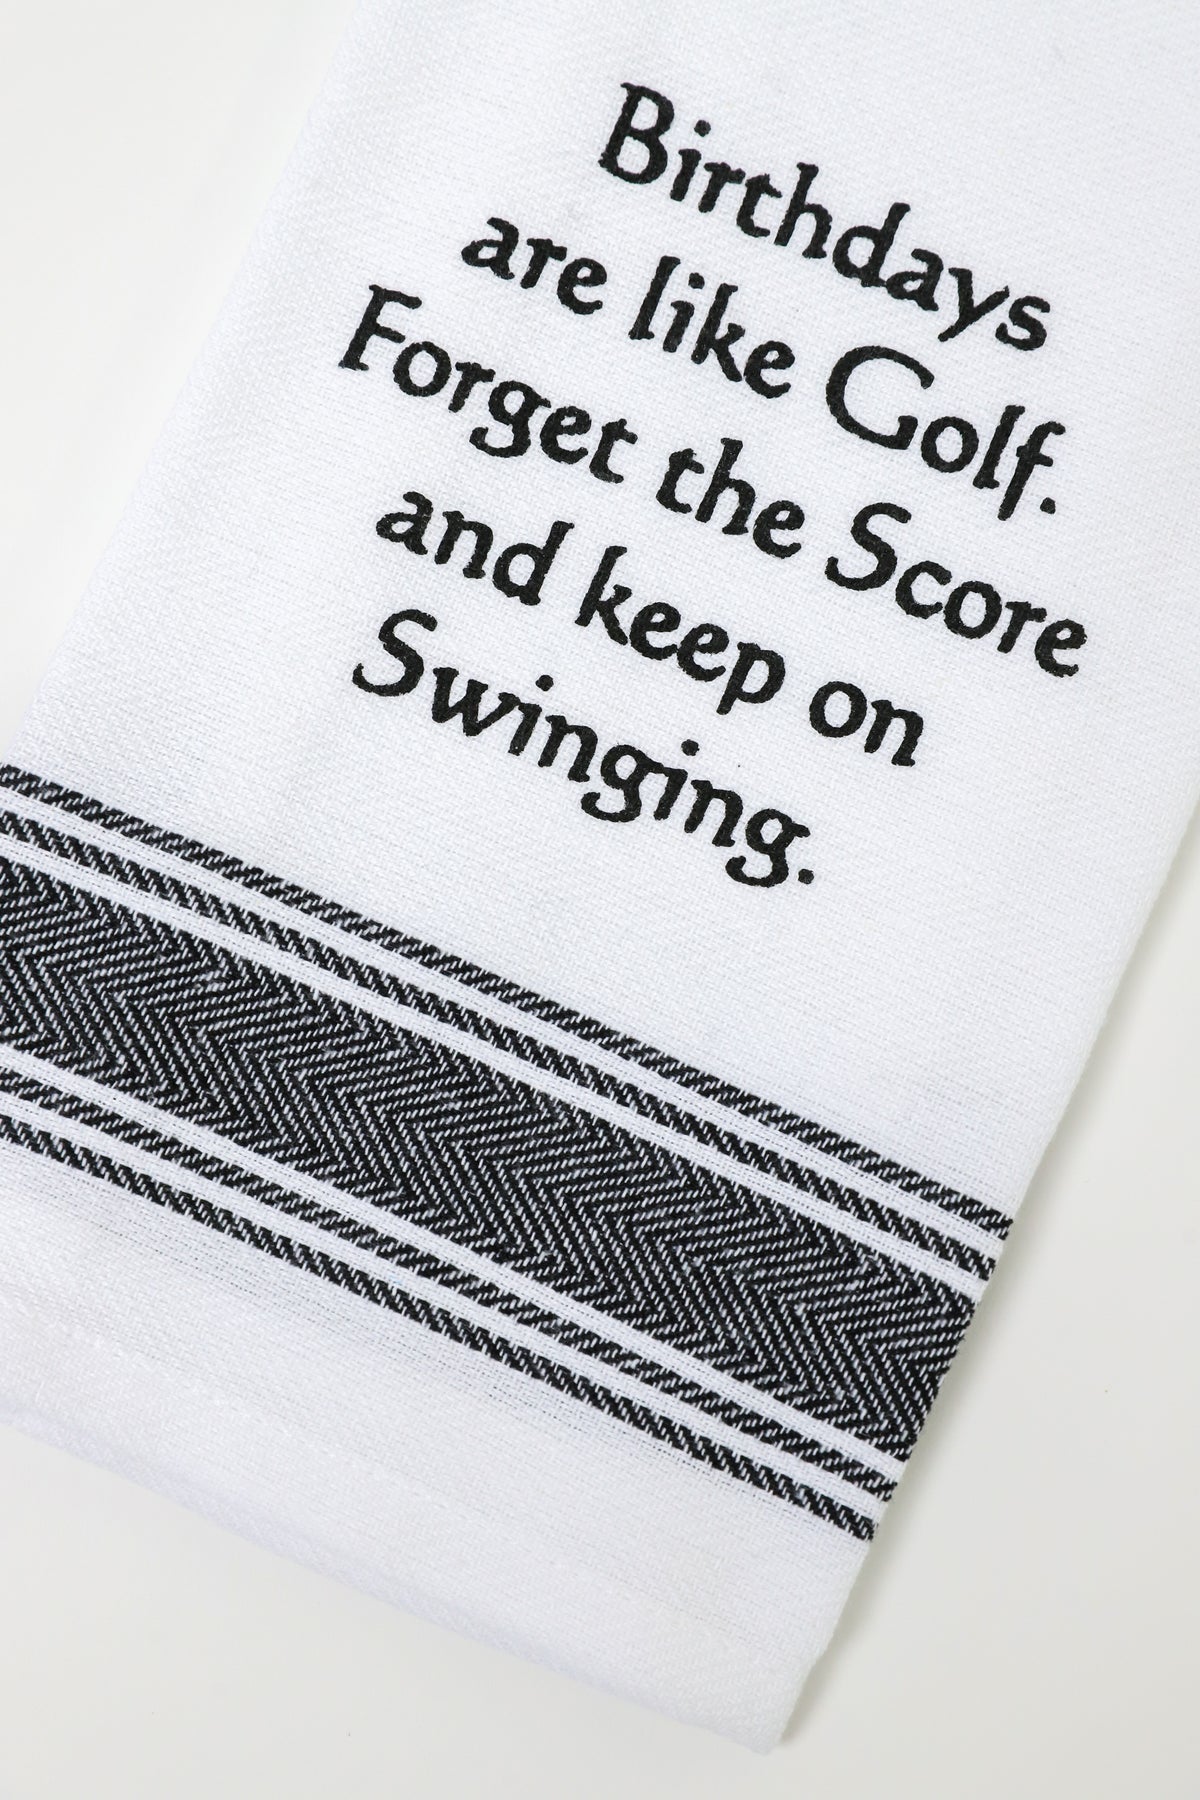 Birthdays are like Golf Kitchen Towel